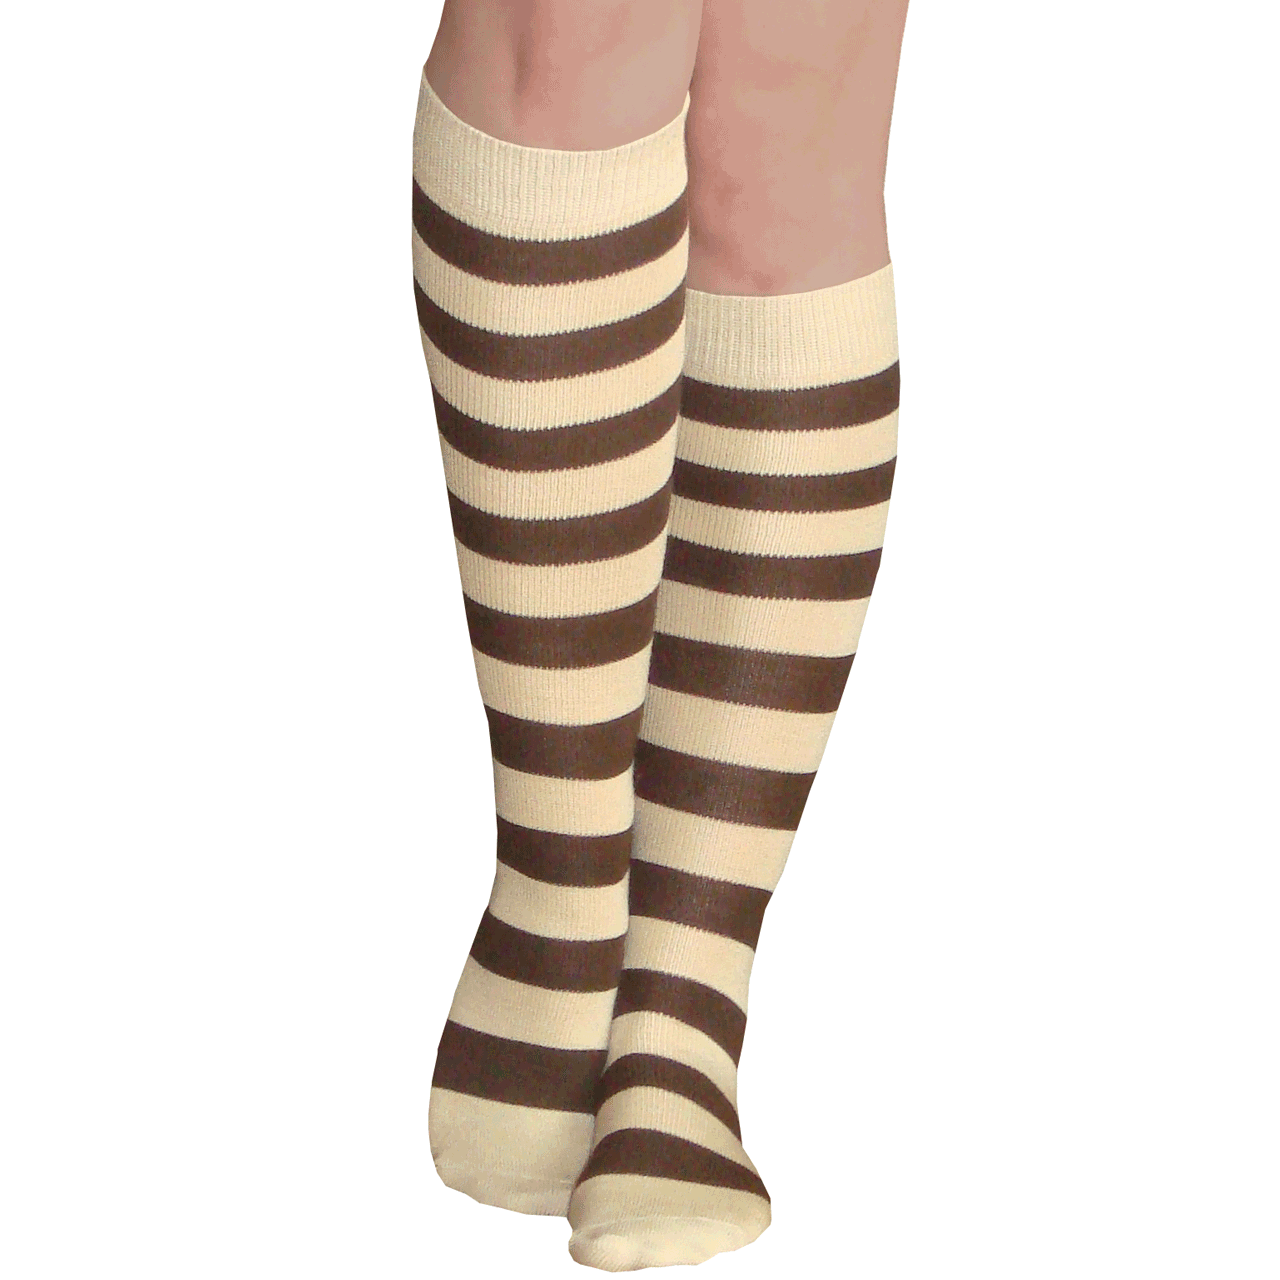 Striped Brown/Tan Knee High Socks